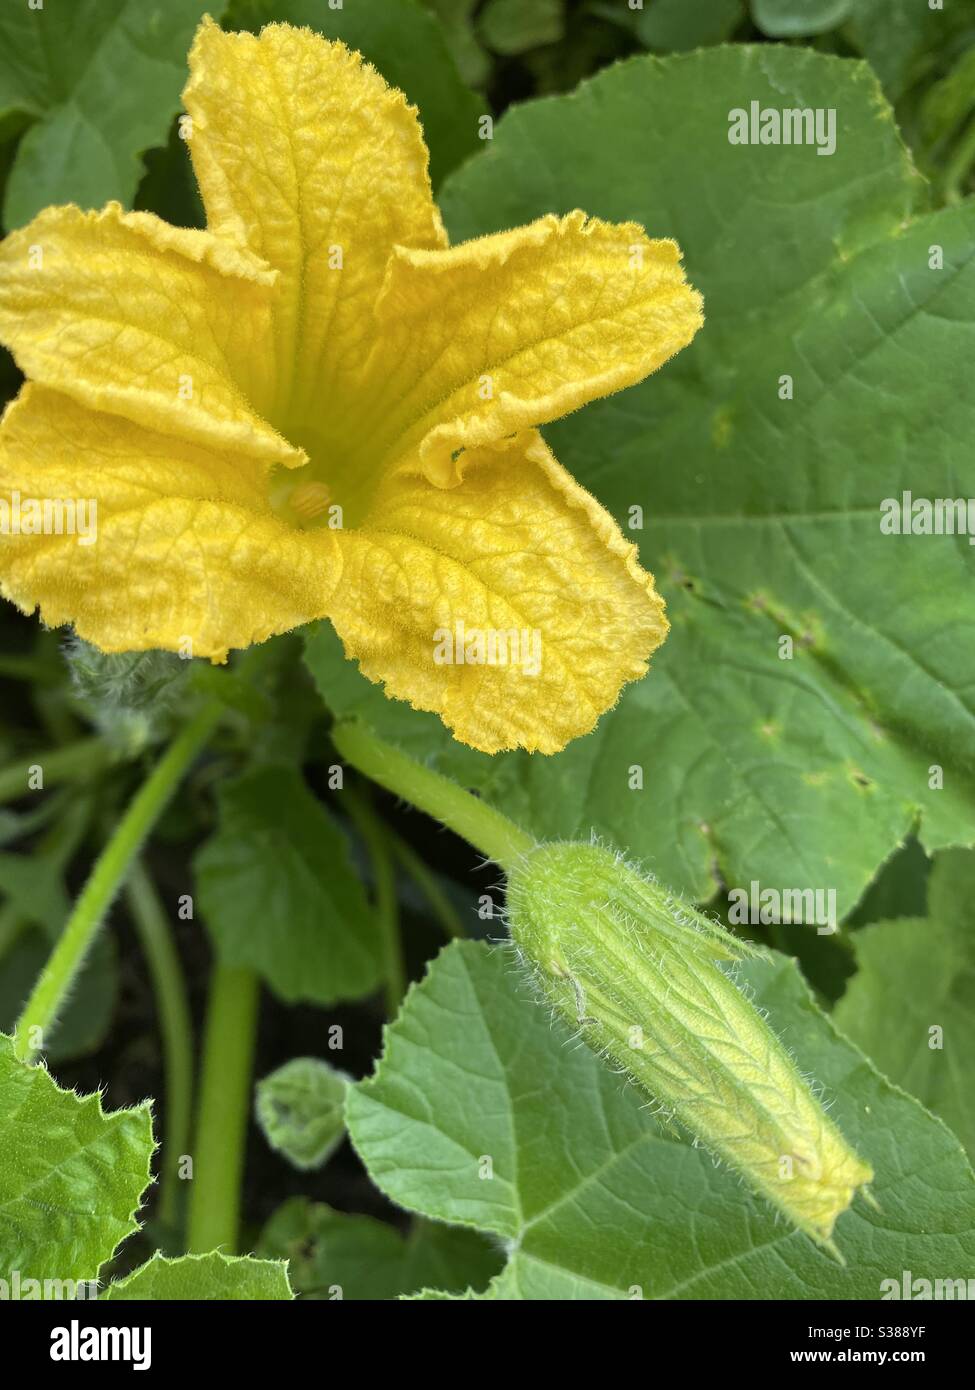 Turks Turb, Veg flower Squash plant Stock Photo